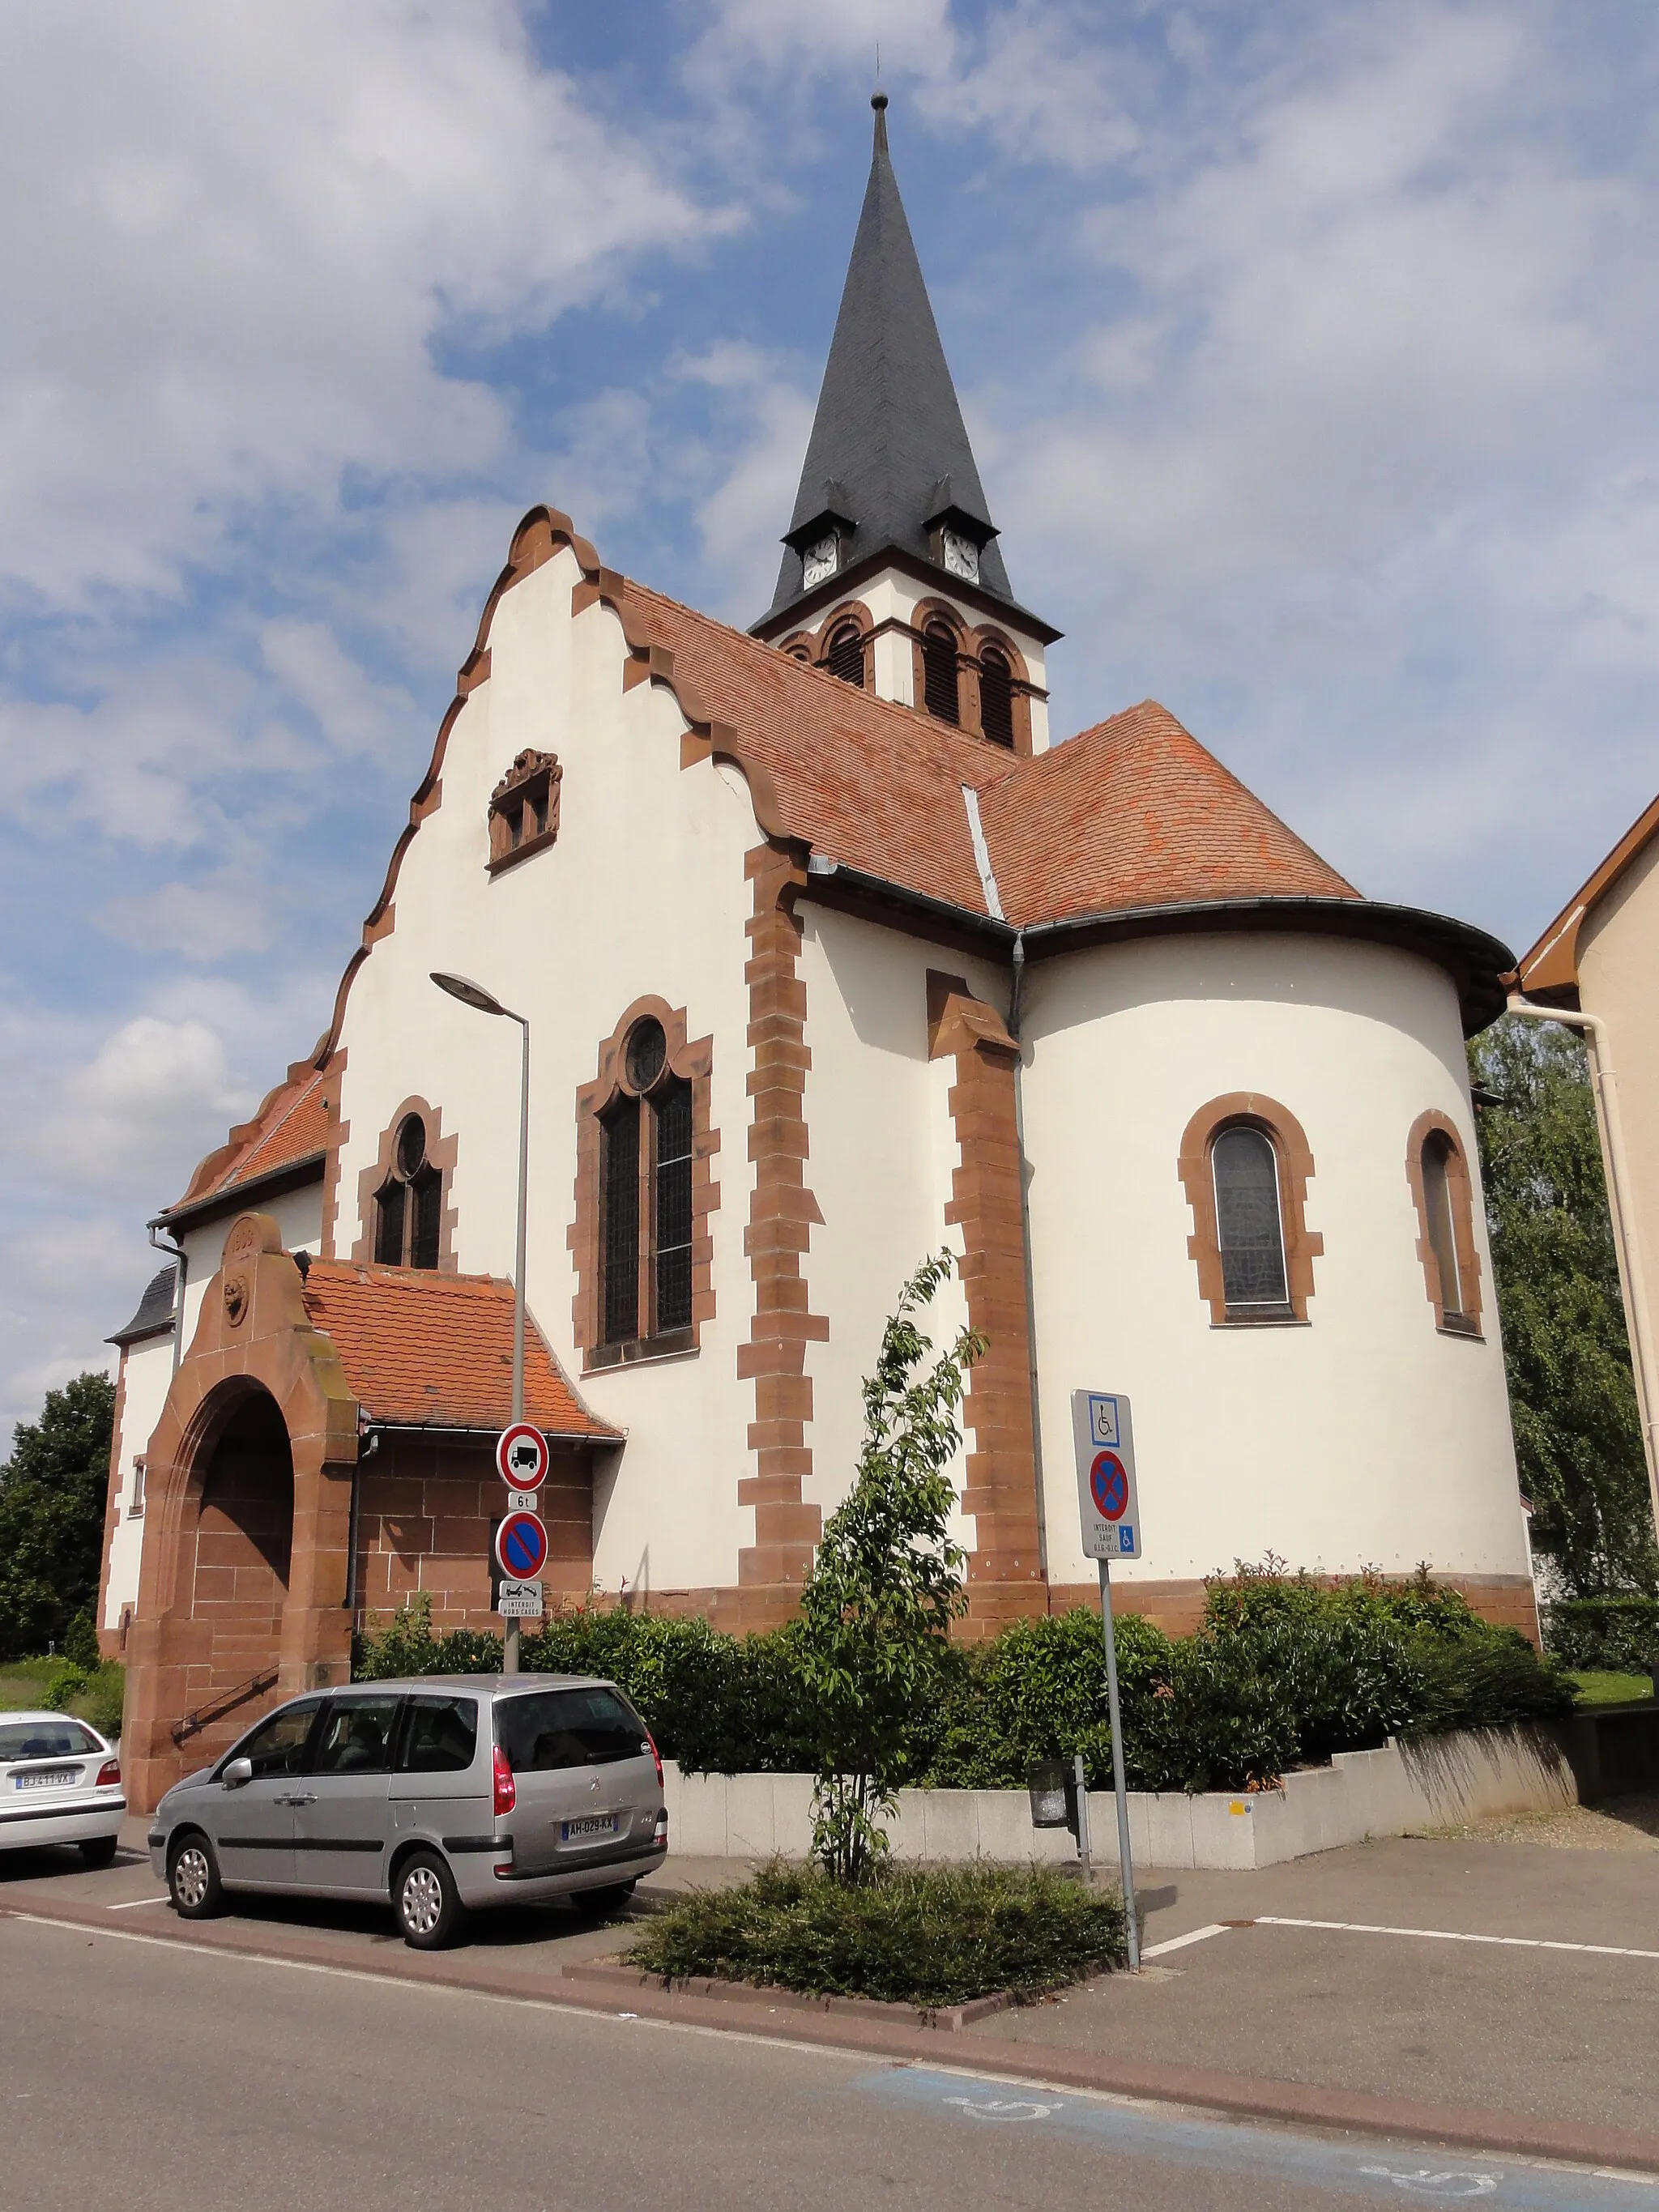 Image of Lingolsheim